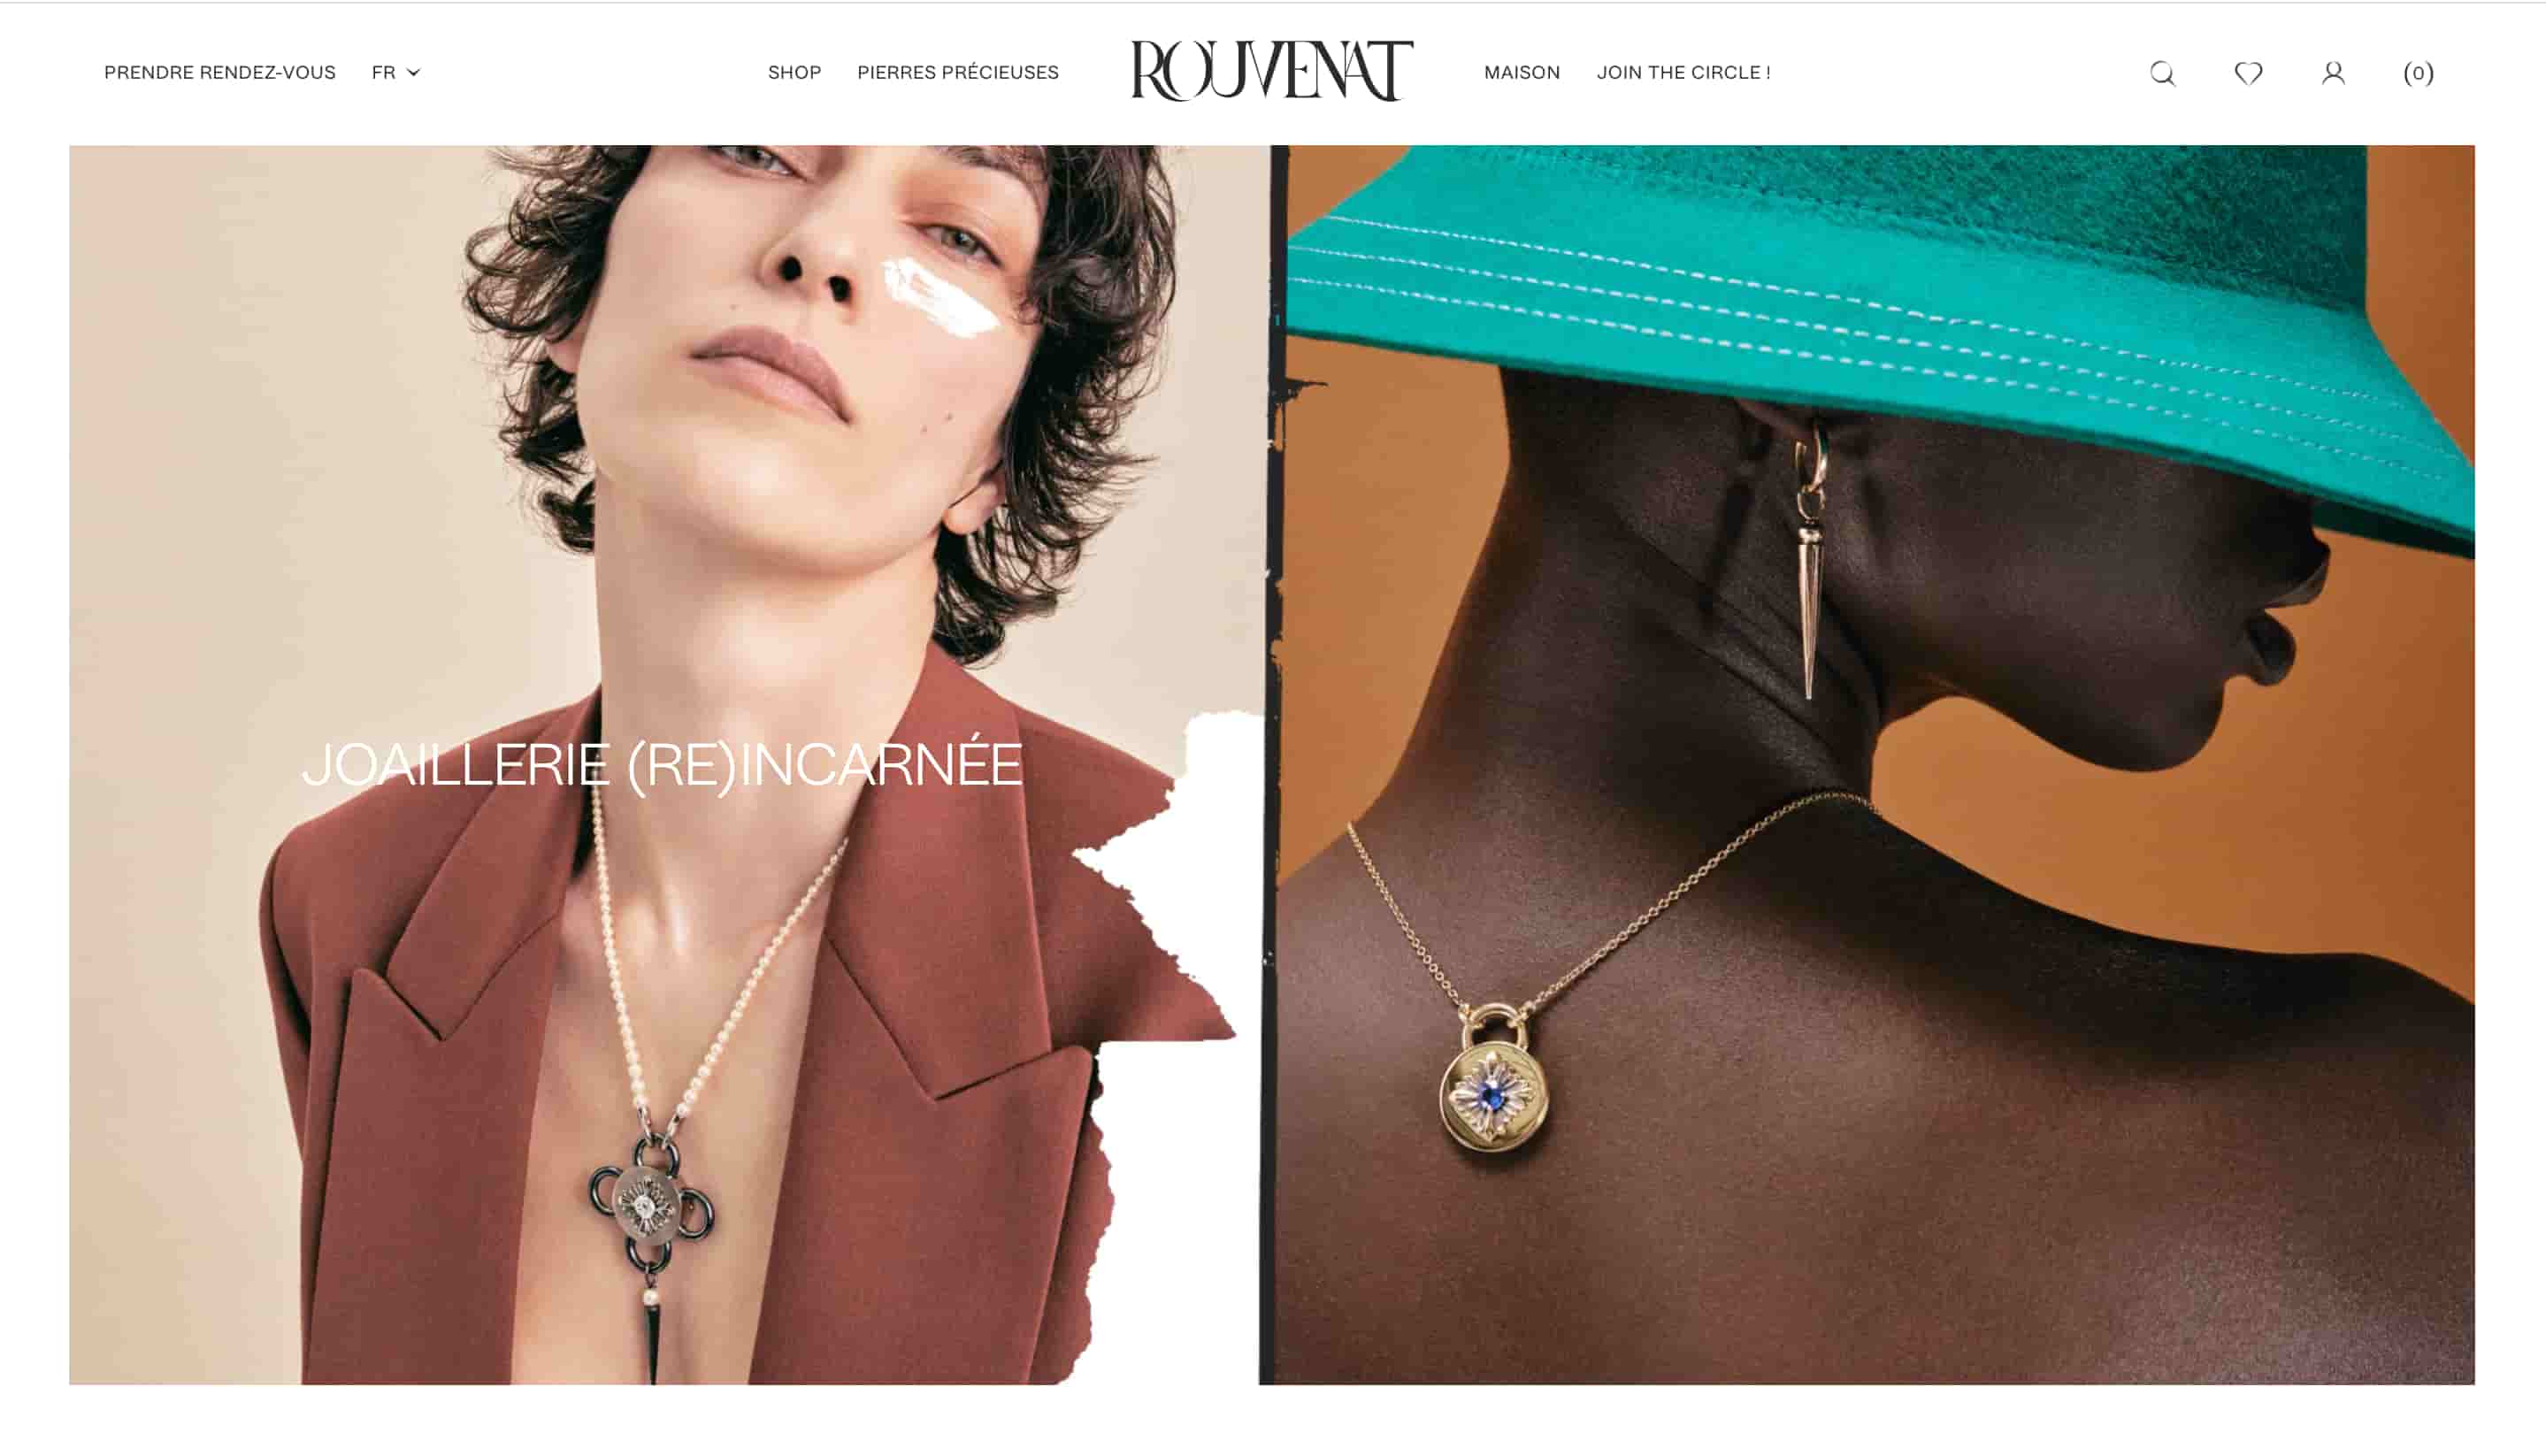 fashion website design rouvenat shows people wearing brand jewlery in split-screen 